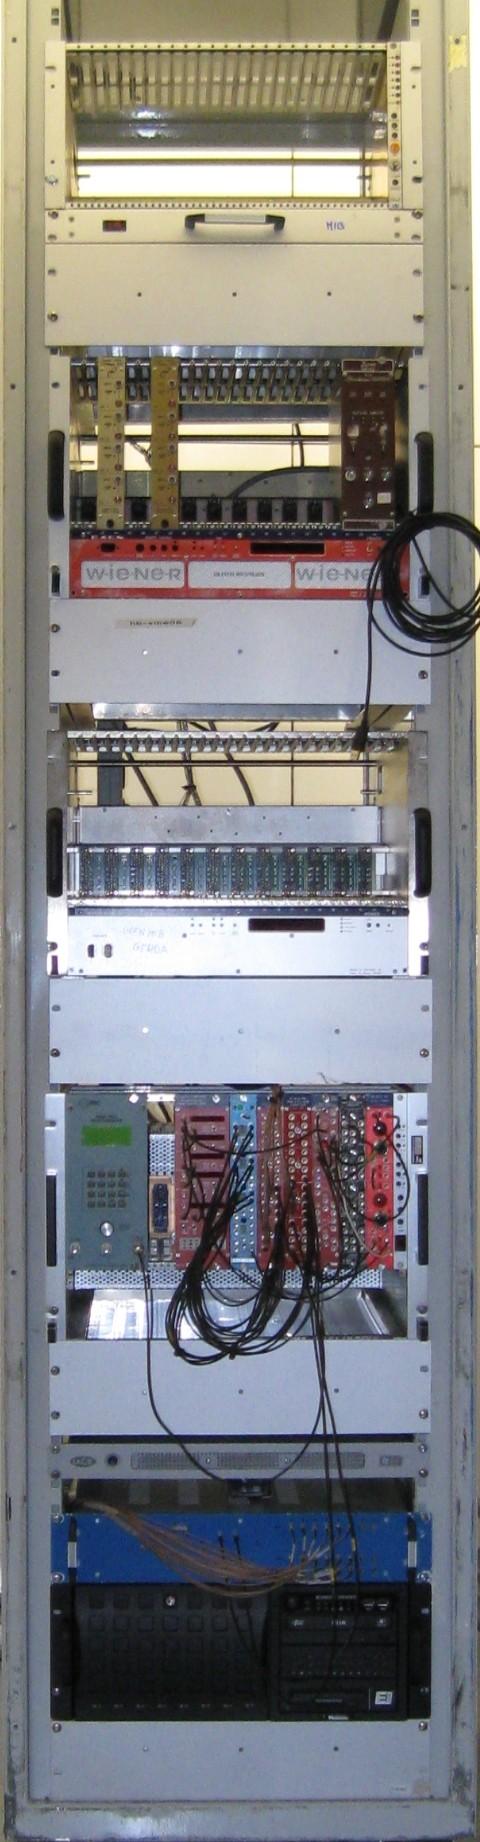 The Electronic Cabinet Analogue Electronics Digitizers Ge HV